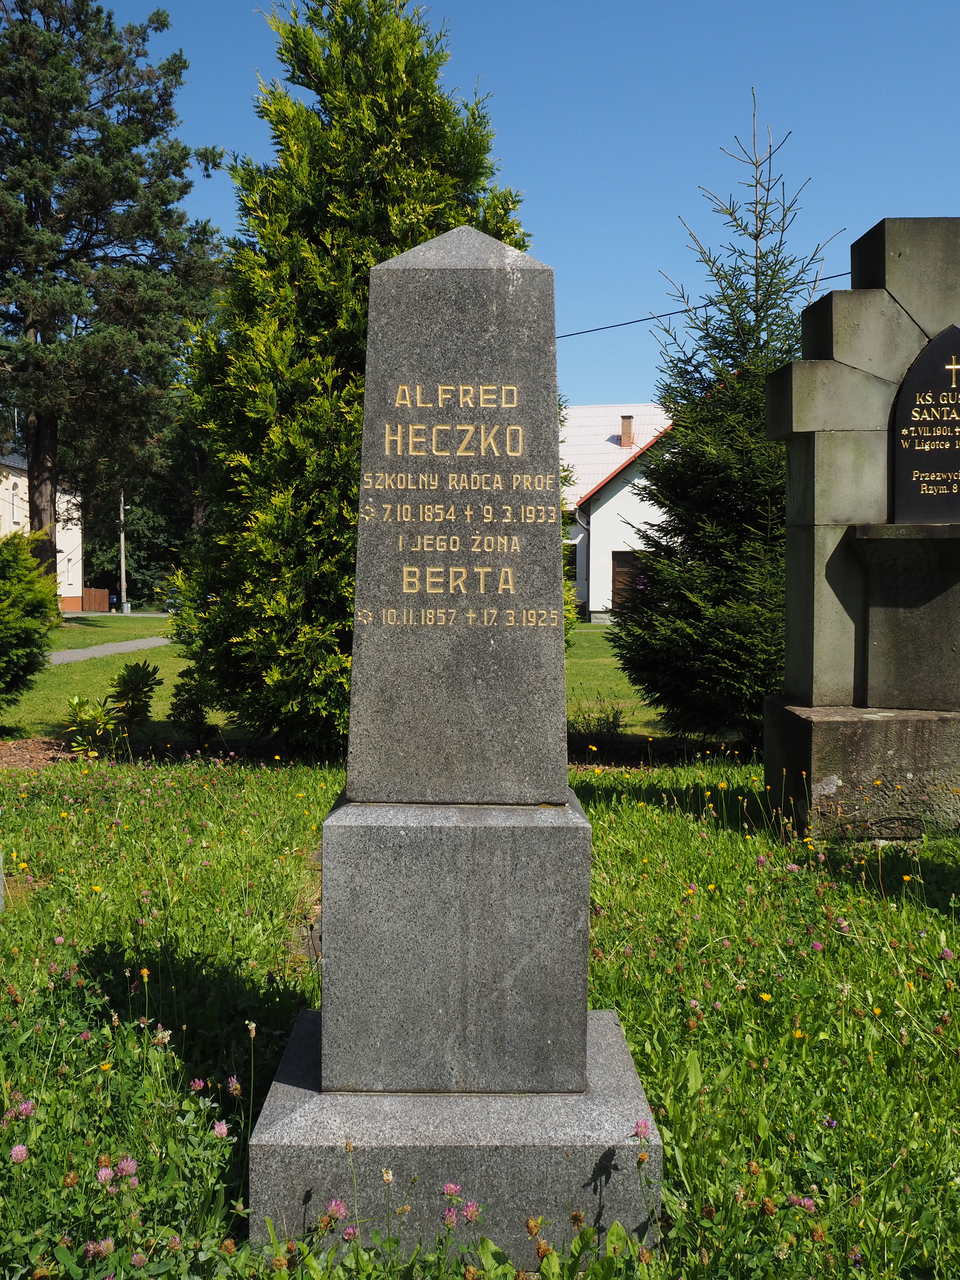 Tombstone of Alfred and Berta Heczko, cemetery in Ligotka Kameralna, 2022